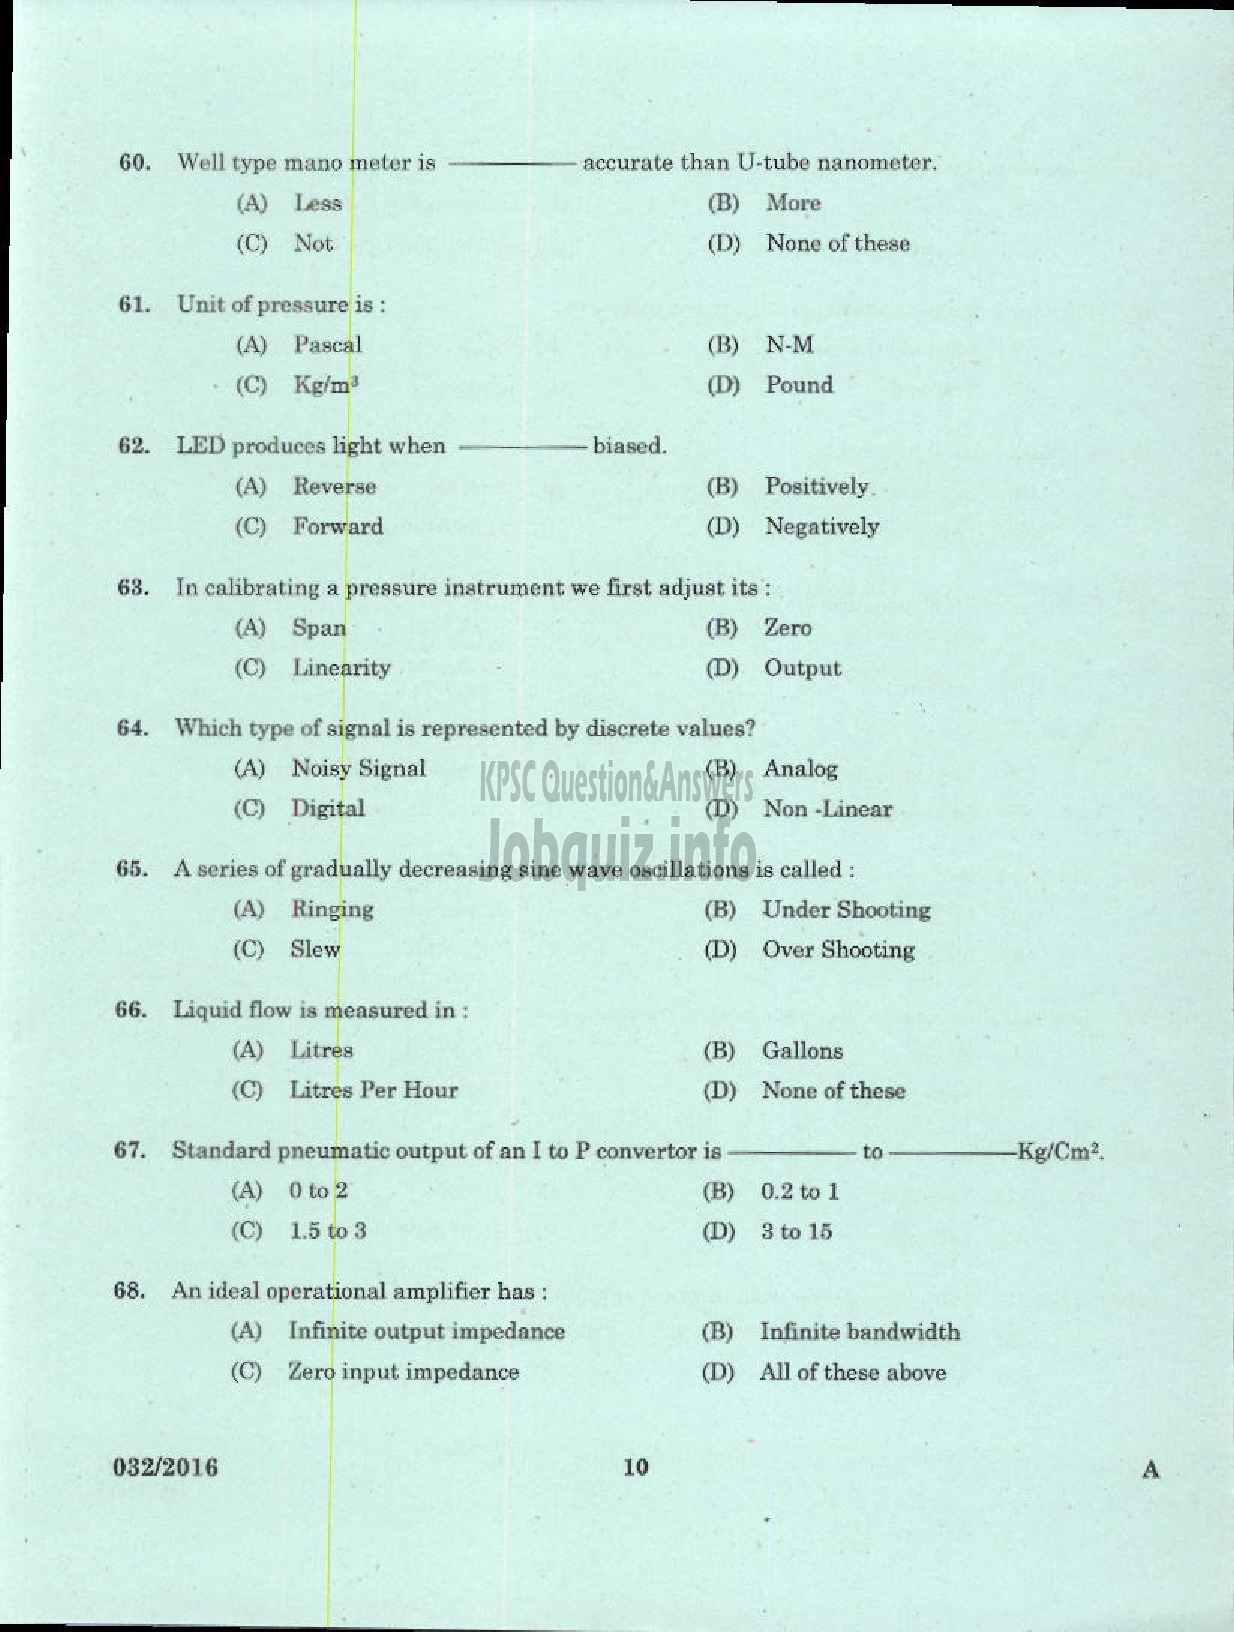 Kerala PSC Question Paper - TRADESMAN INSTRUMENT MECHANIC TECHNICAL EDUCATION-8